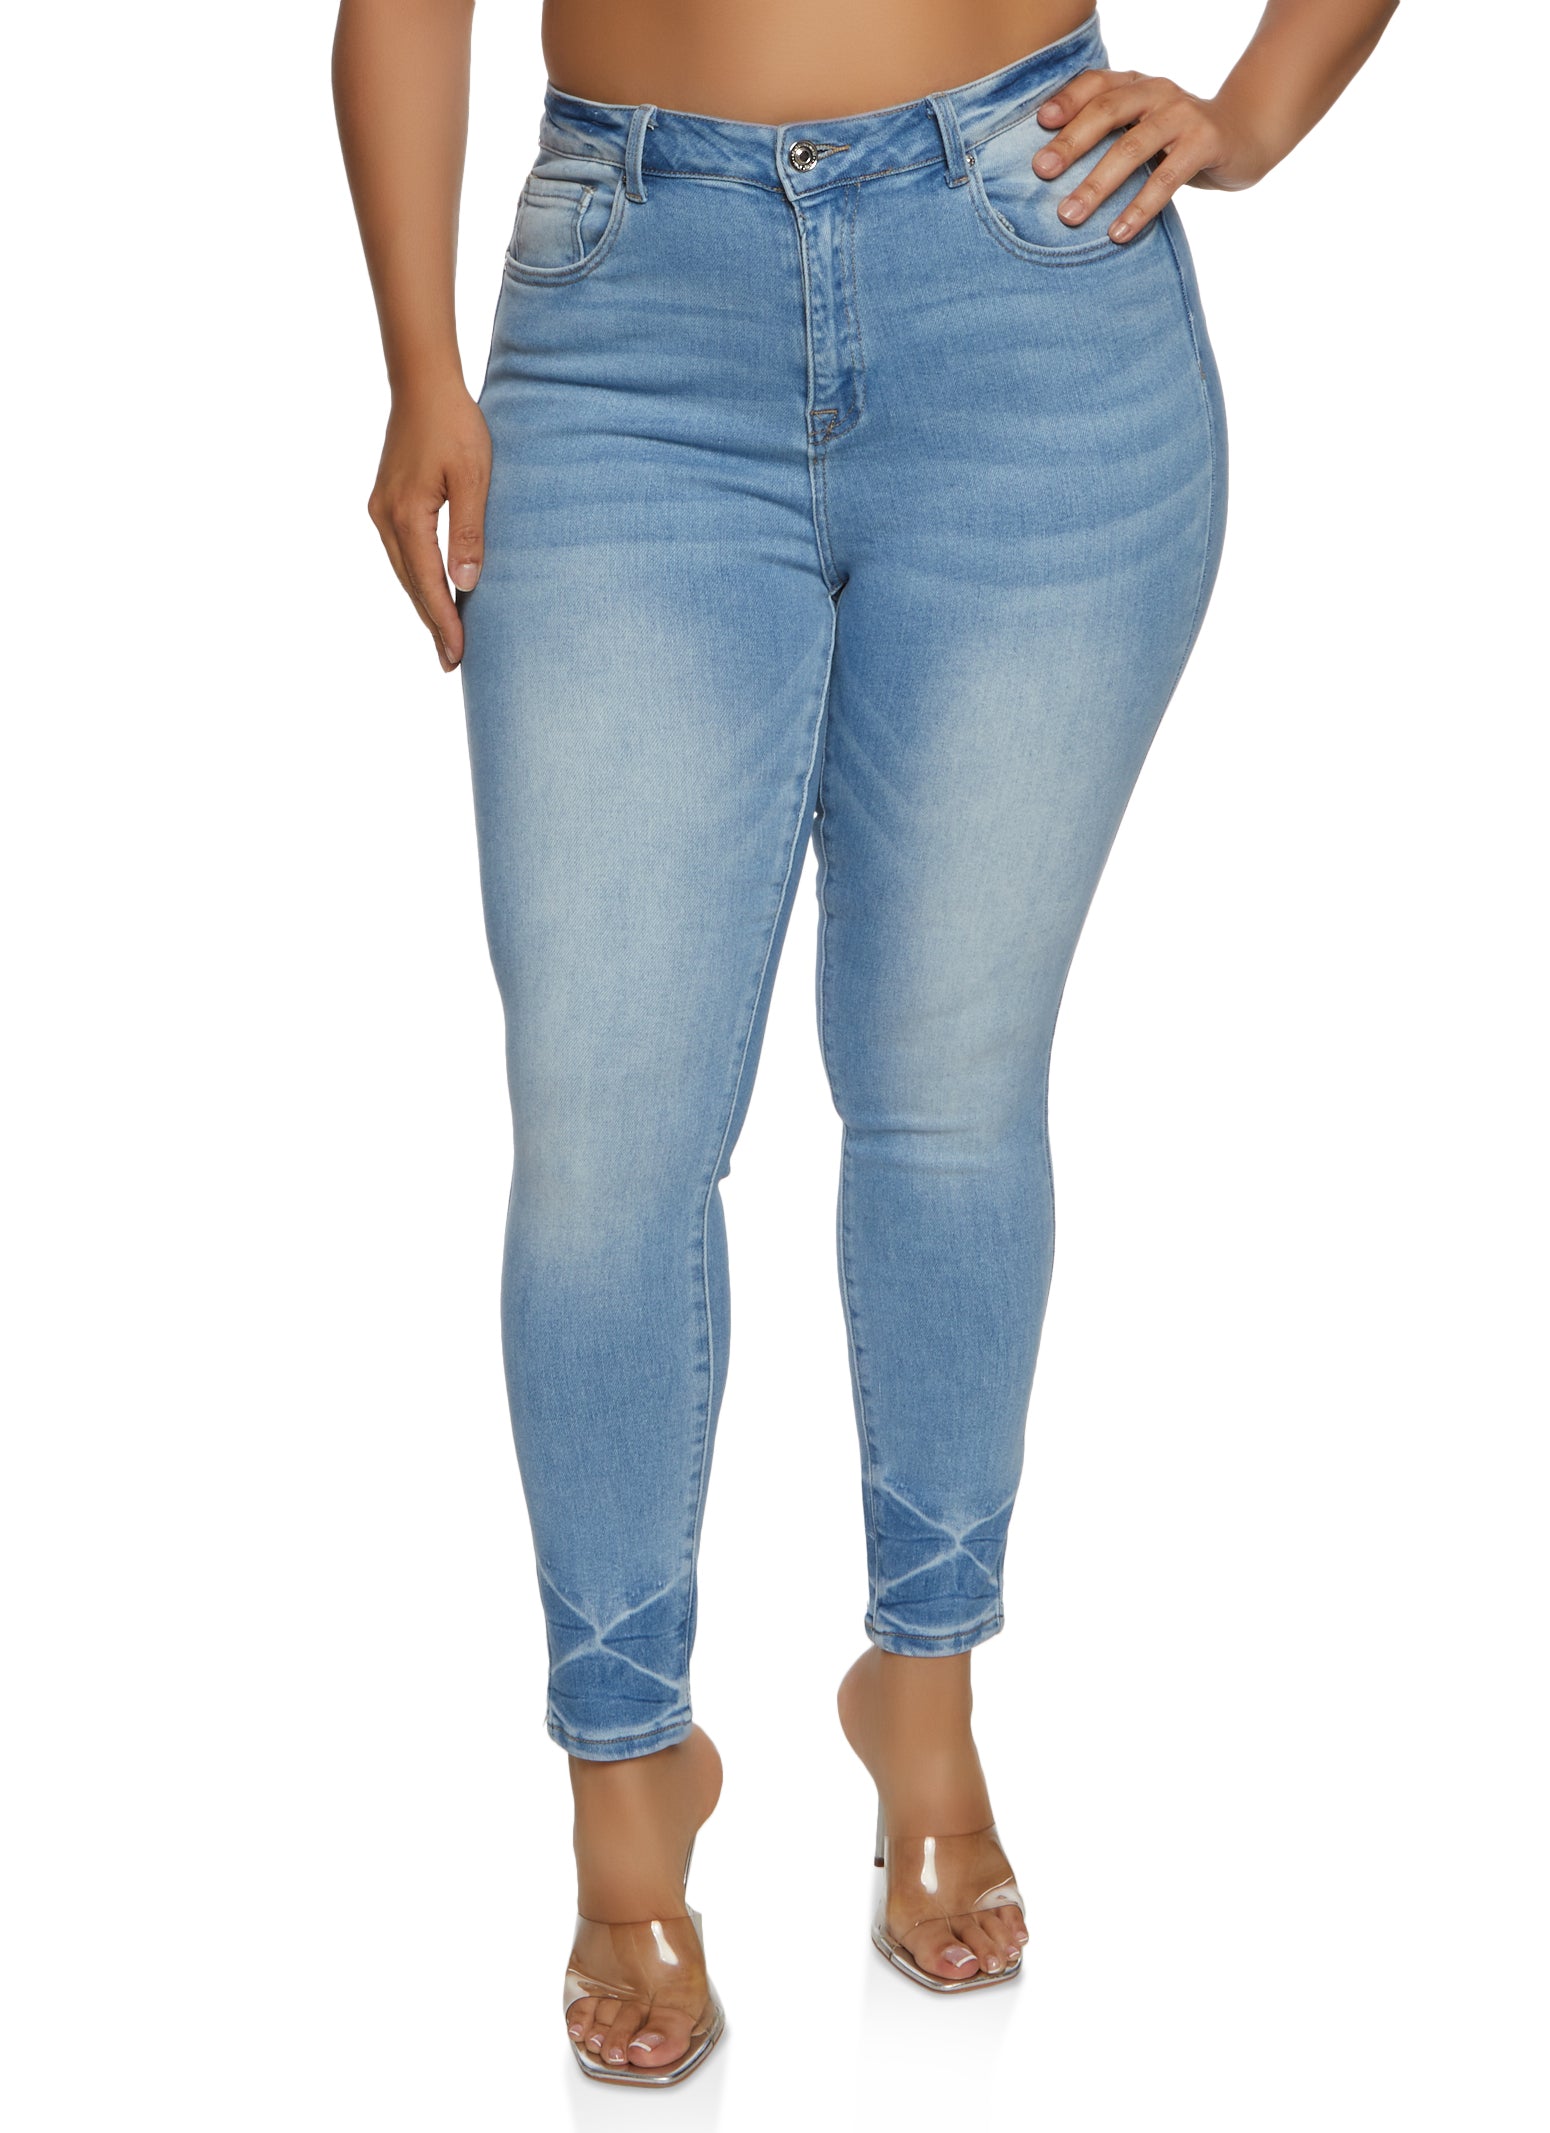 KISSPLUS Plus Size Baggy Jeans for Women High Waist Loose Women Jeans Curvy  Stretchy Black and Blue Denim Pants for Women, Light Blue, 14 Plus Petite  price in Saudi Arabia